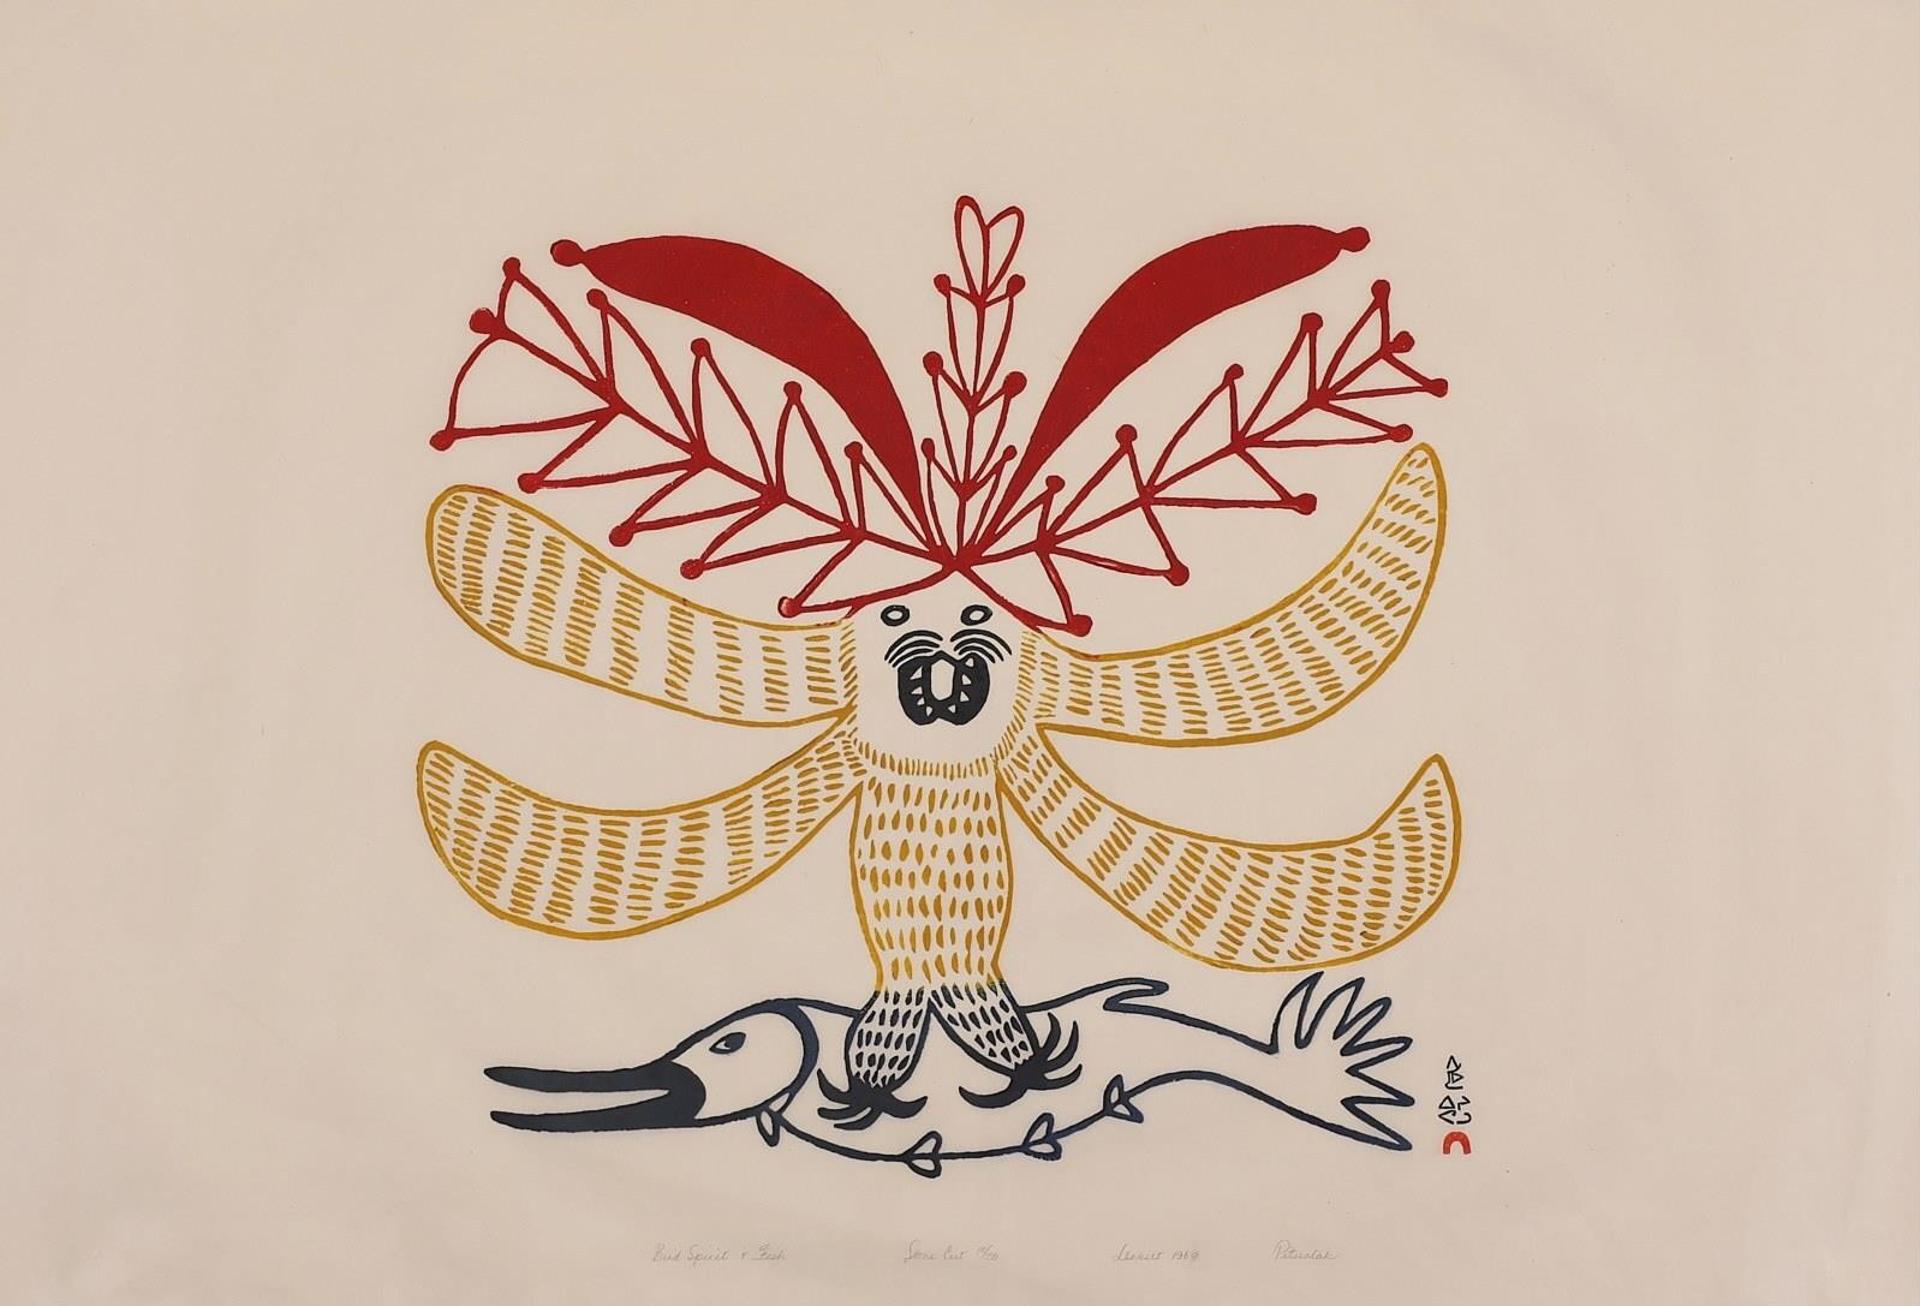 Pitseolak Ashoona (1904-1983) - Bird Spirit And Fish; 1969